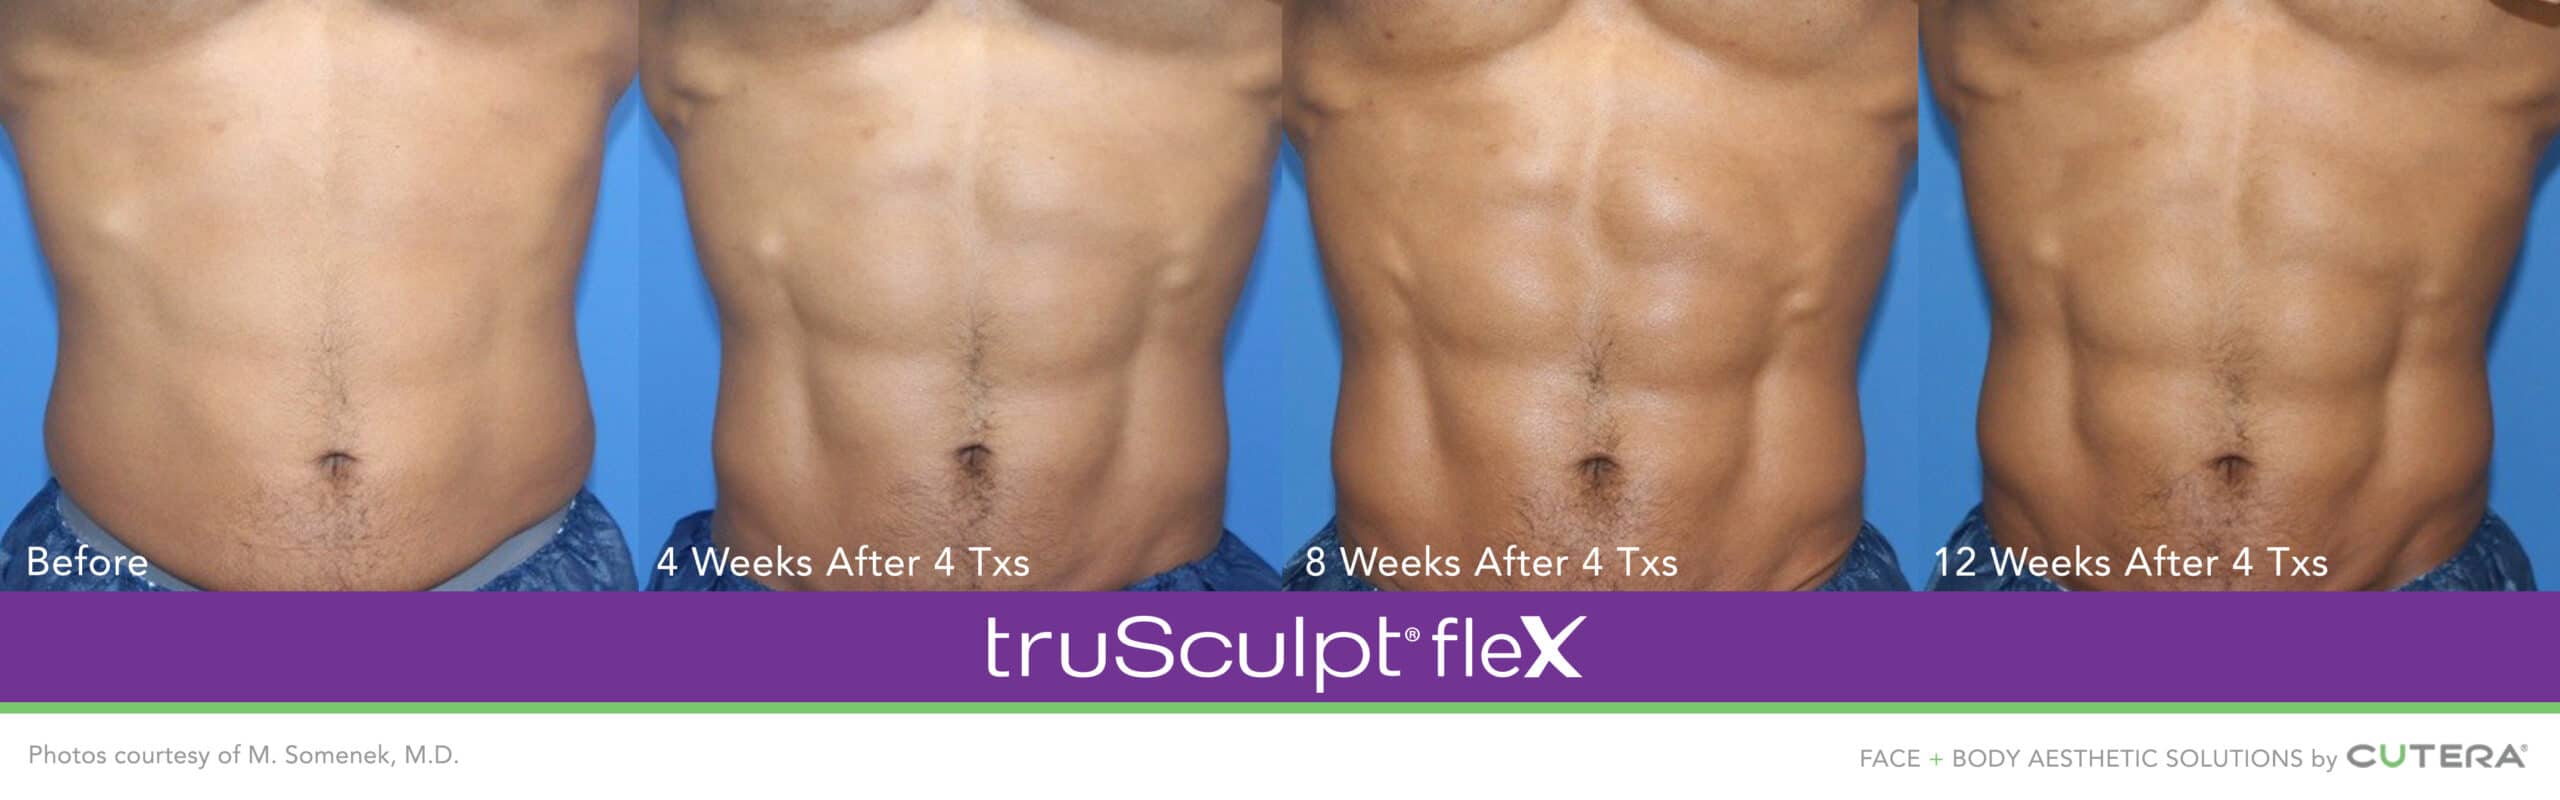 Muscle Toning – truSculpt flex - Plastic Surgery Montreal